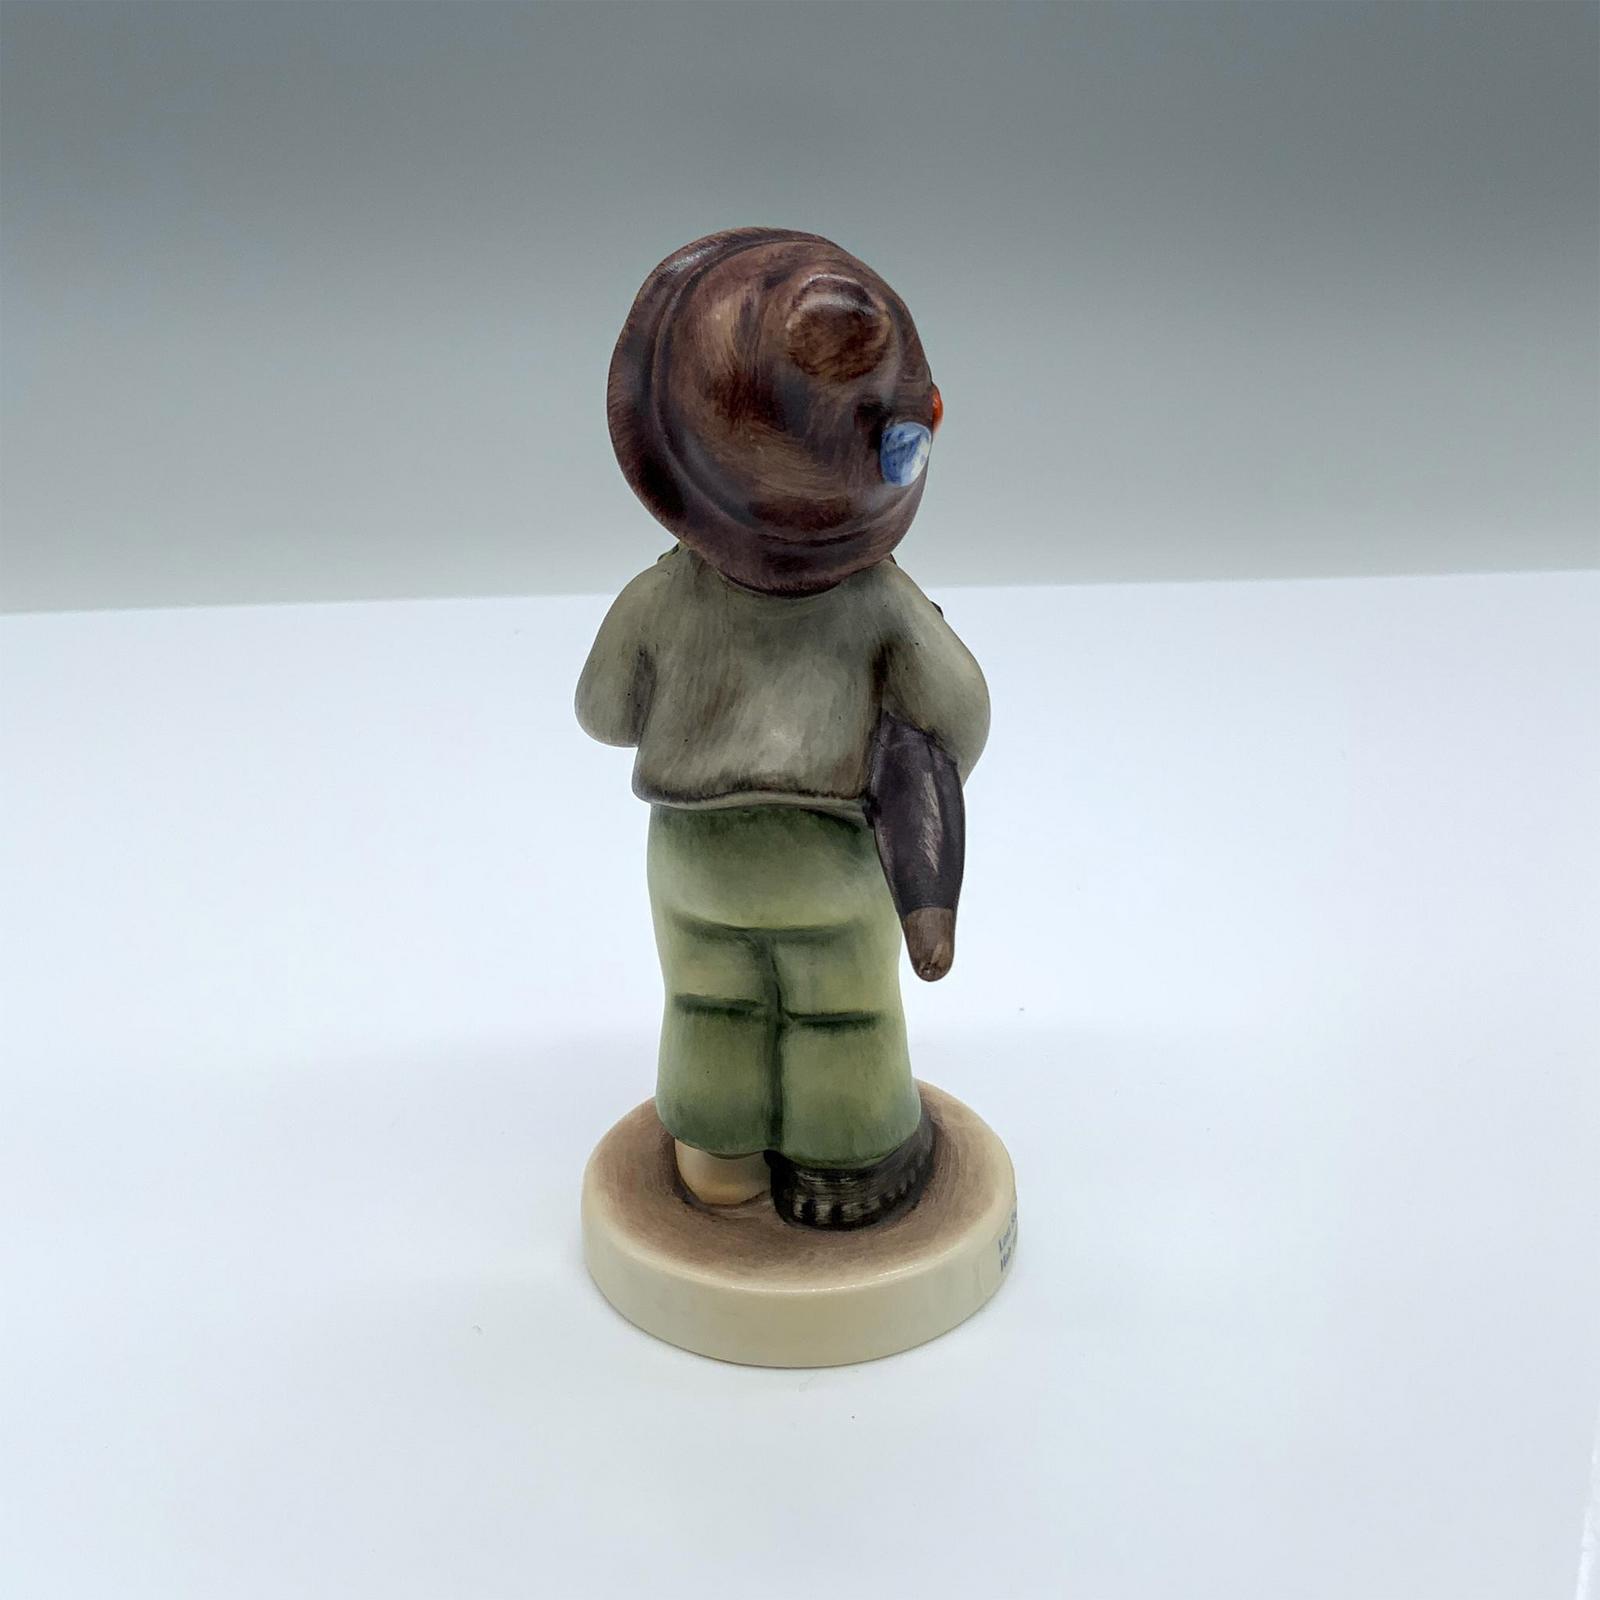 Lost Stocking, Hummel, Goebel, Figurine, Ceramic, Boy, Germany